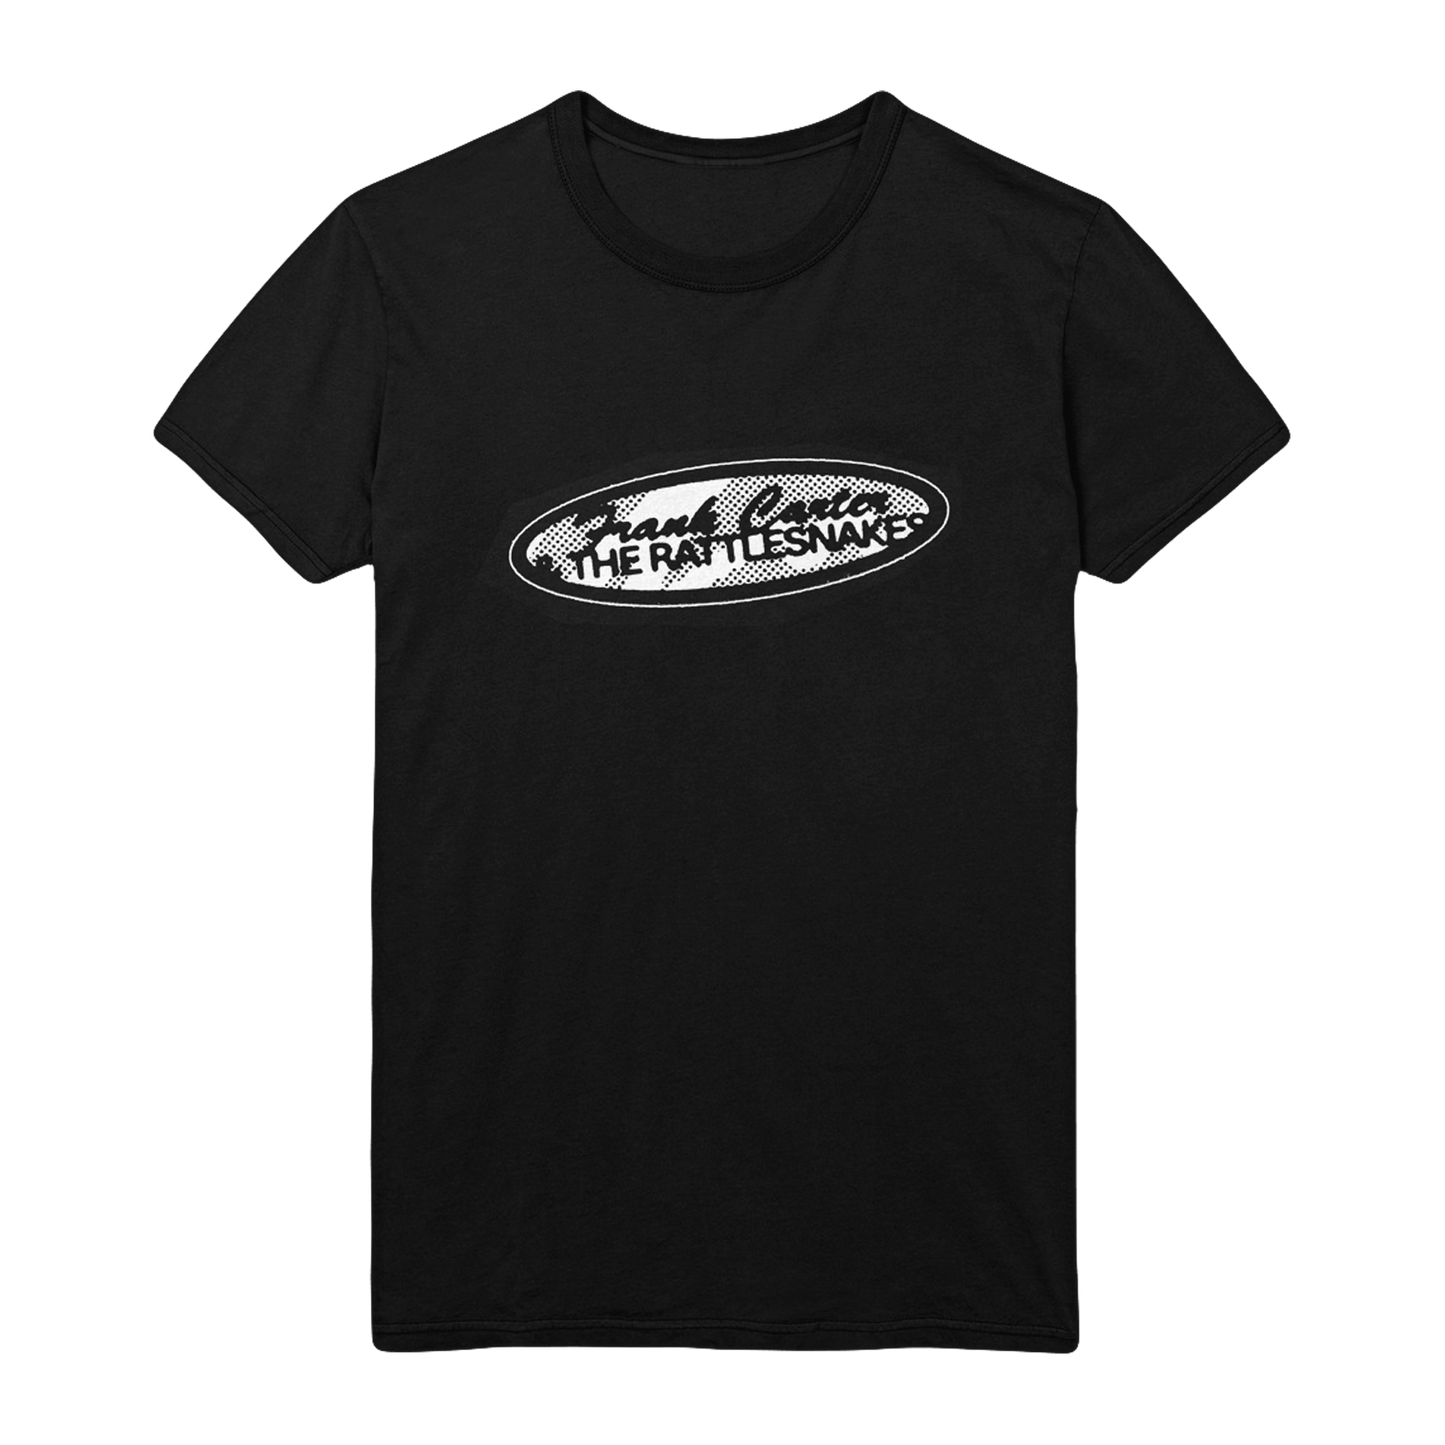 Sticky UK '21 Tour Black T-shirt